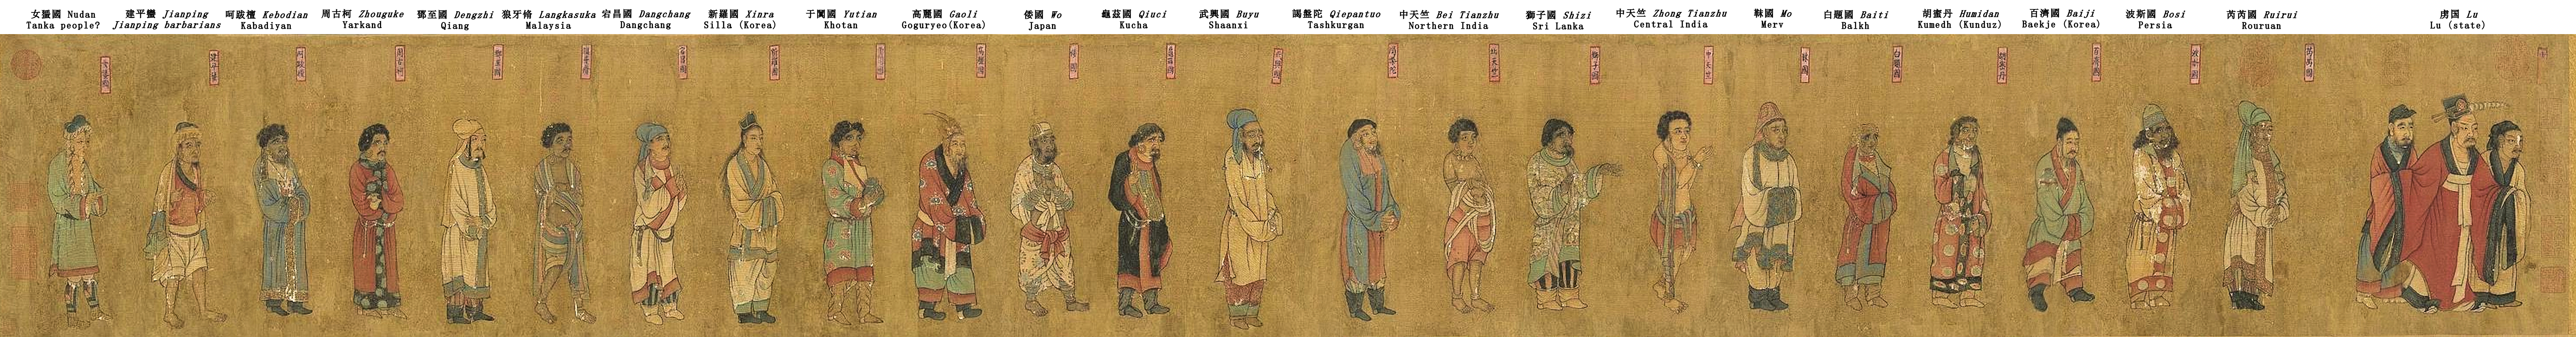 File:王会图 唐阎立本 (annotations).jpg - Wikipedia